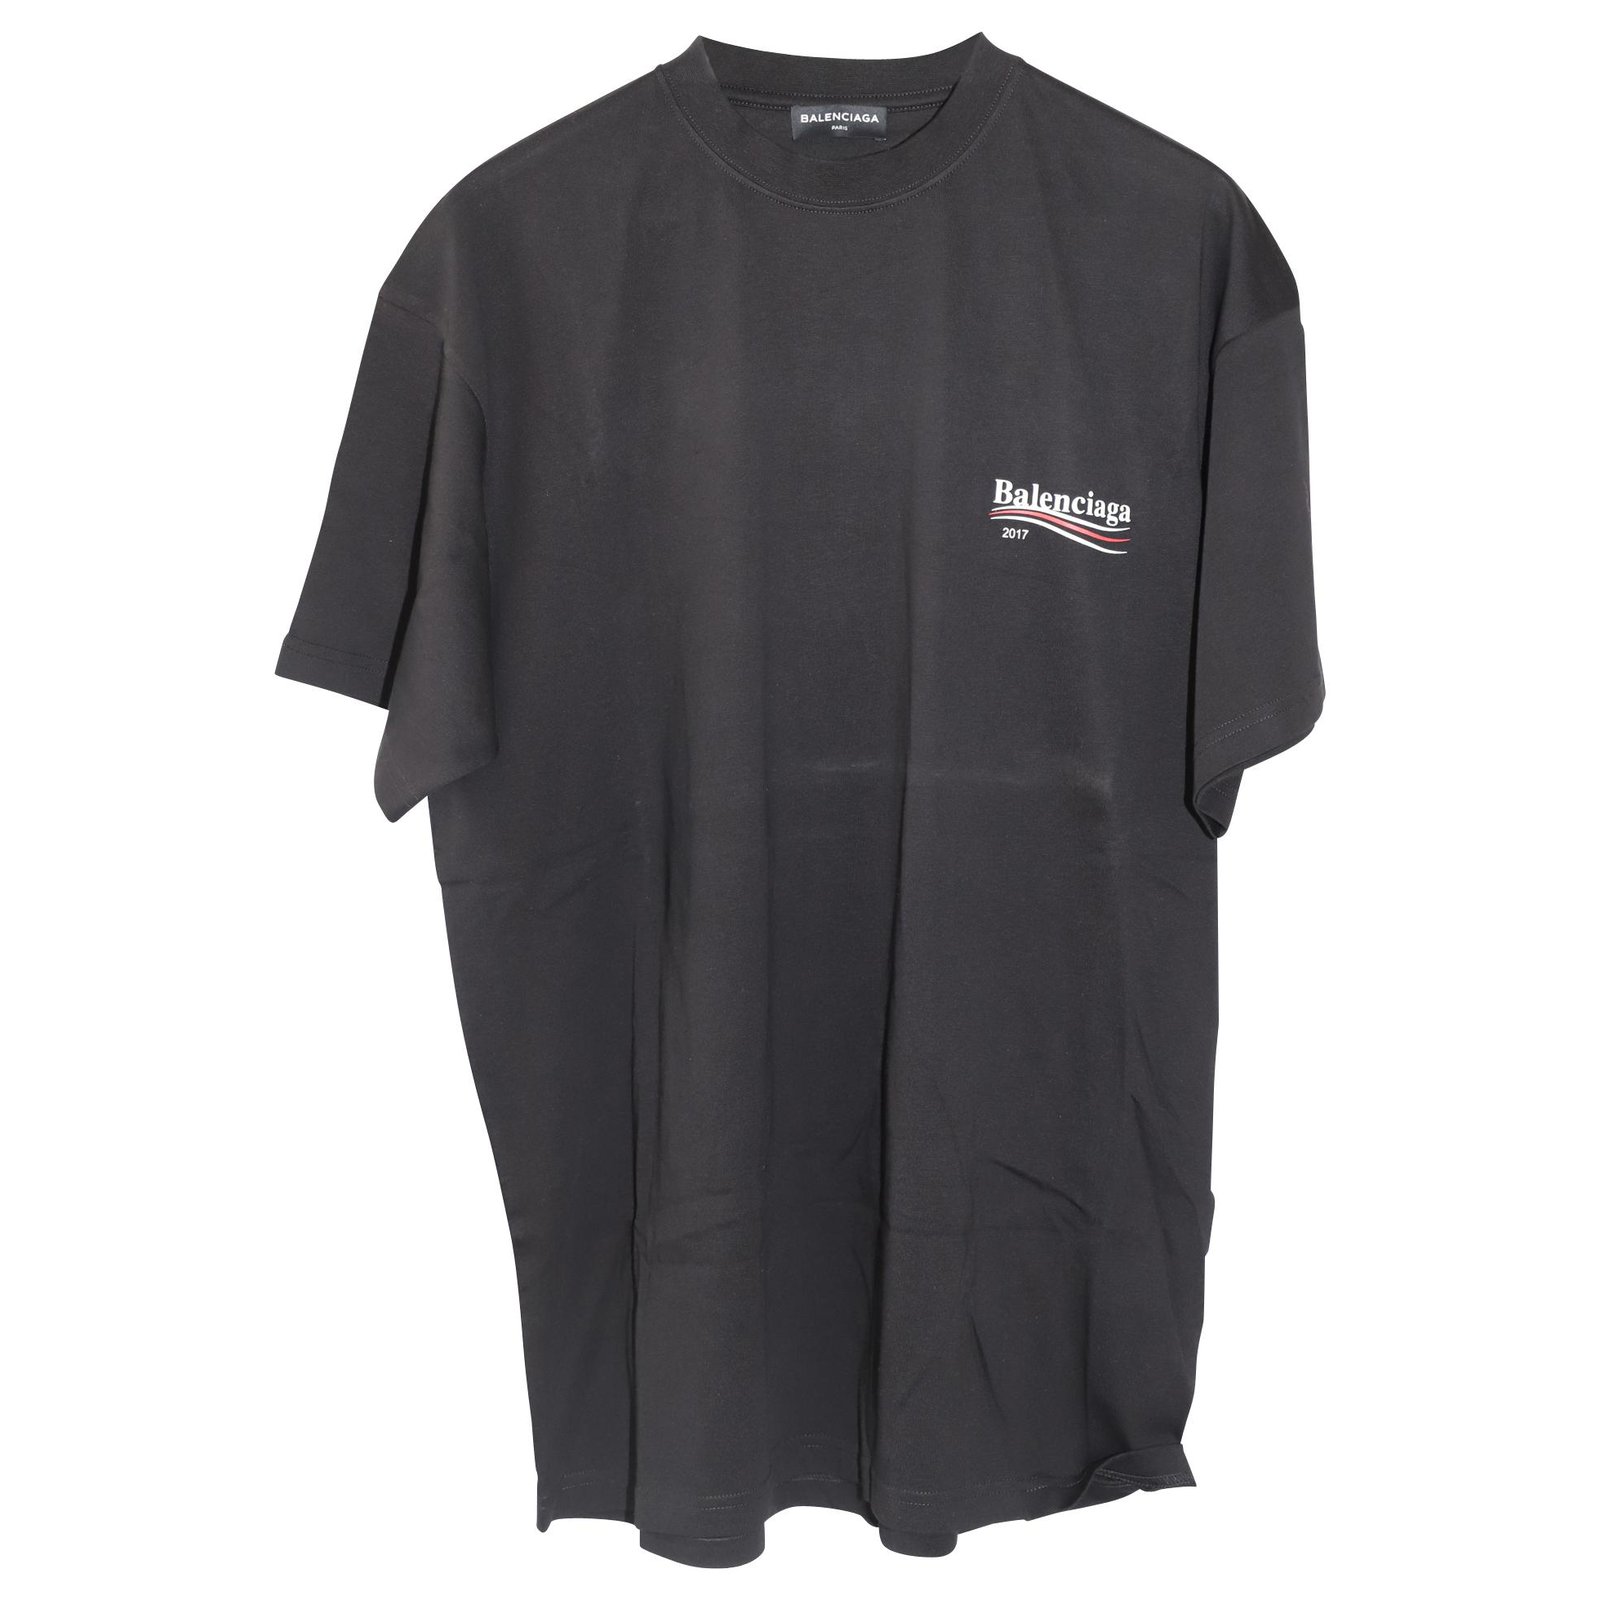 Black 2017 Logo Printed Oversized T-Shirt Cotton - Closet